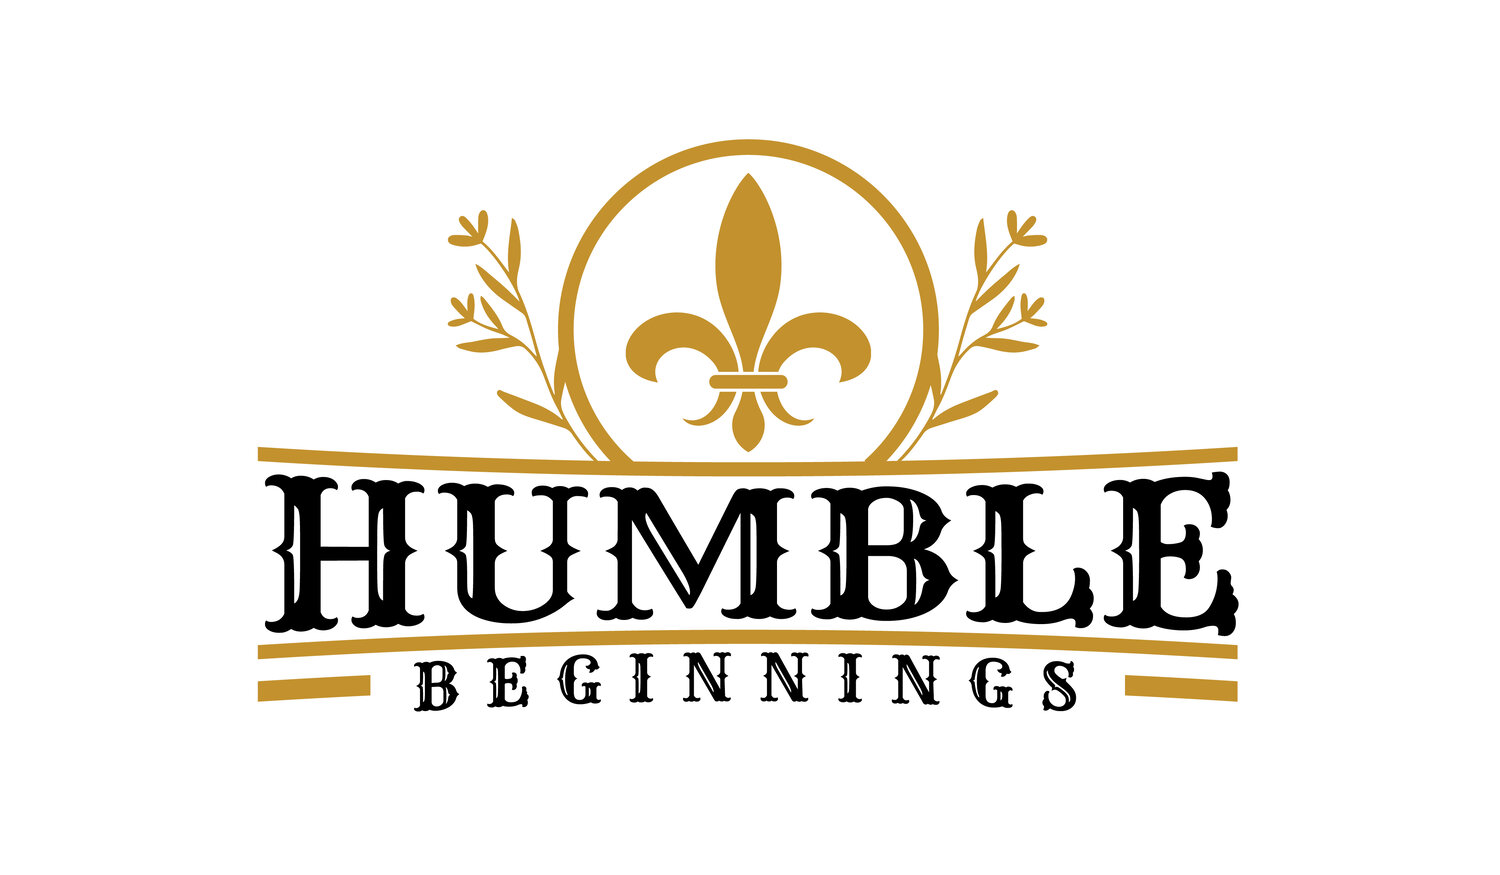 Humble beginings